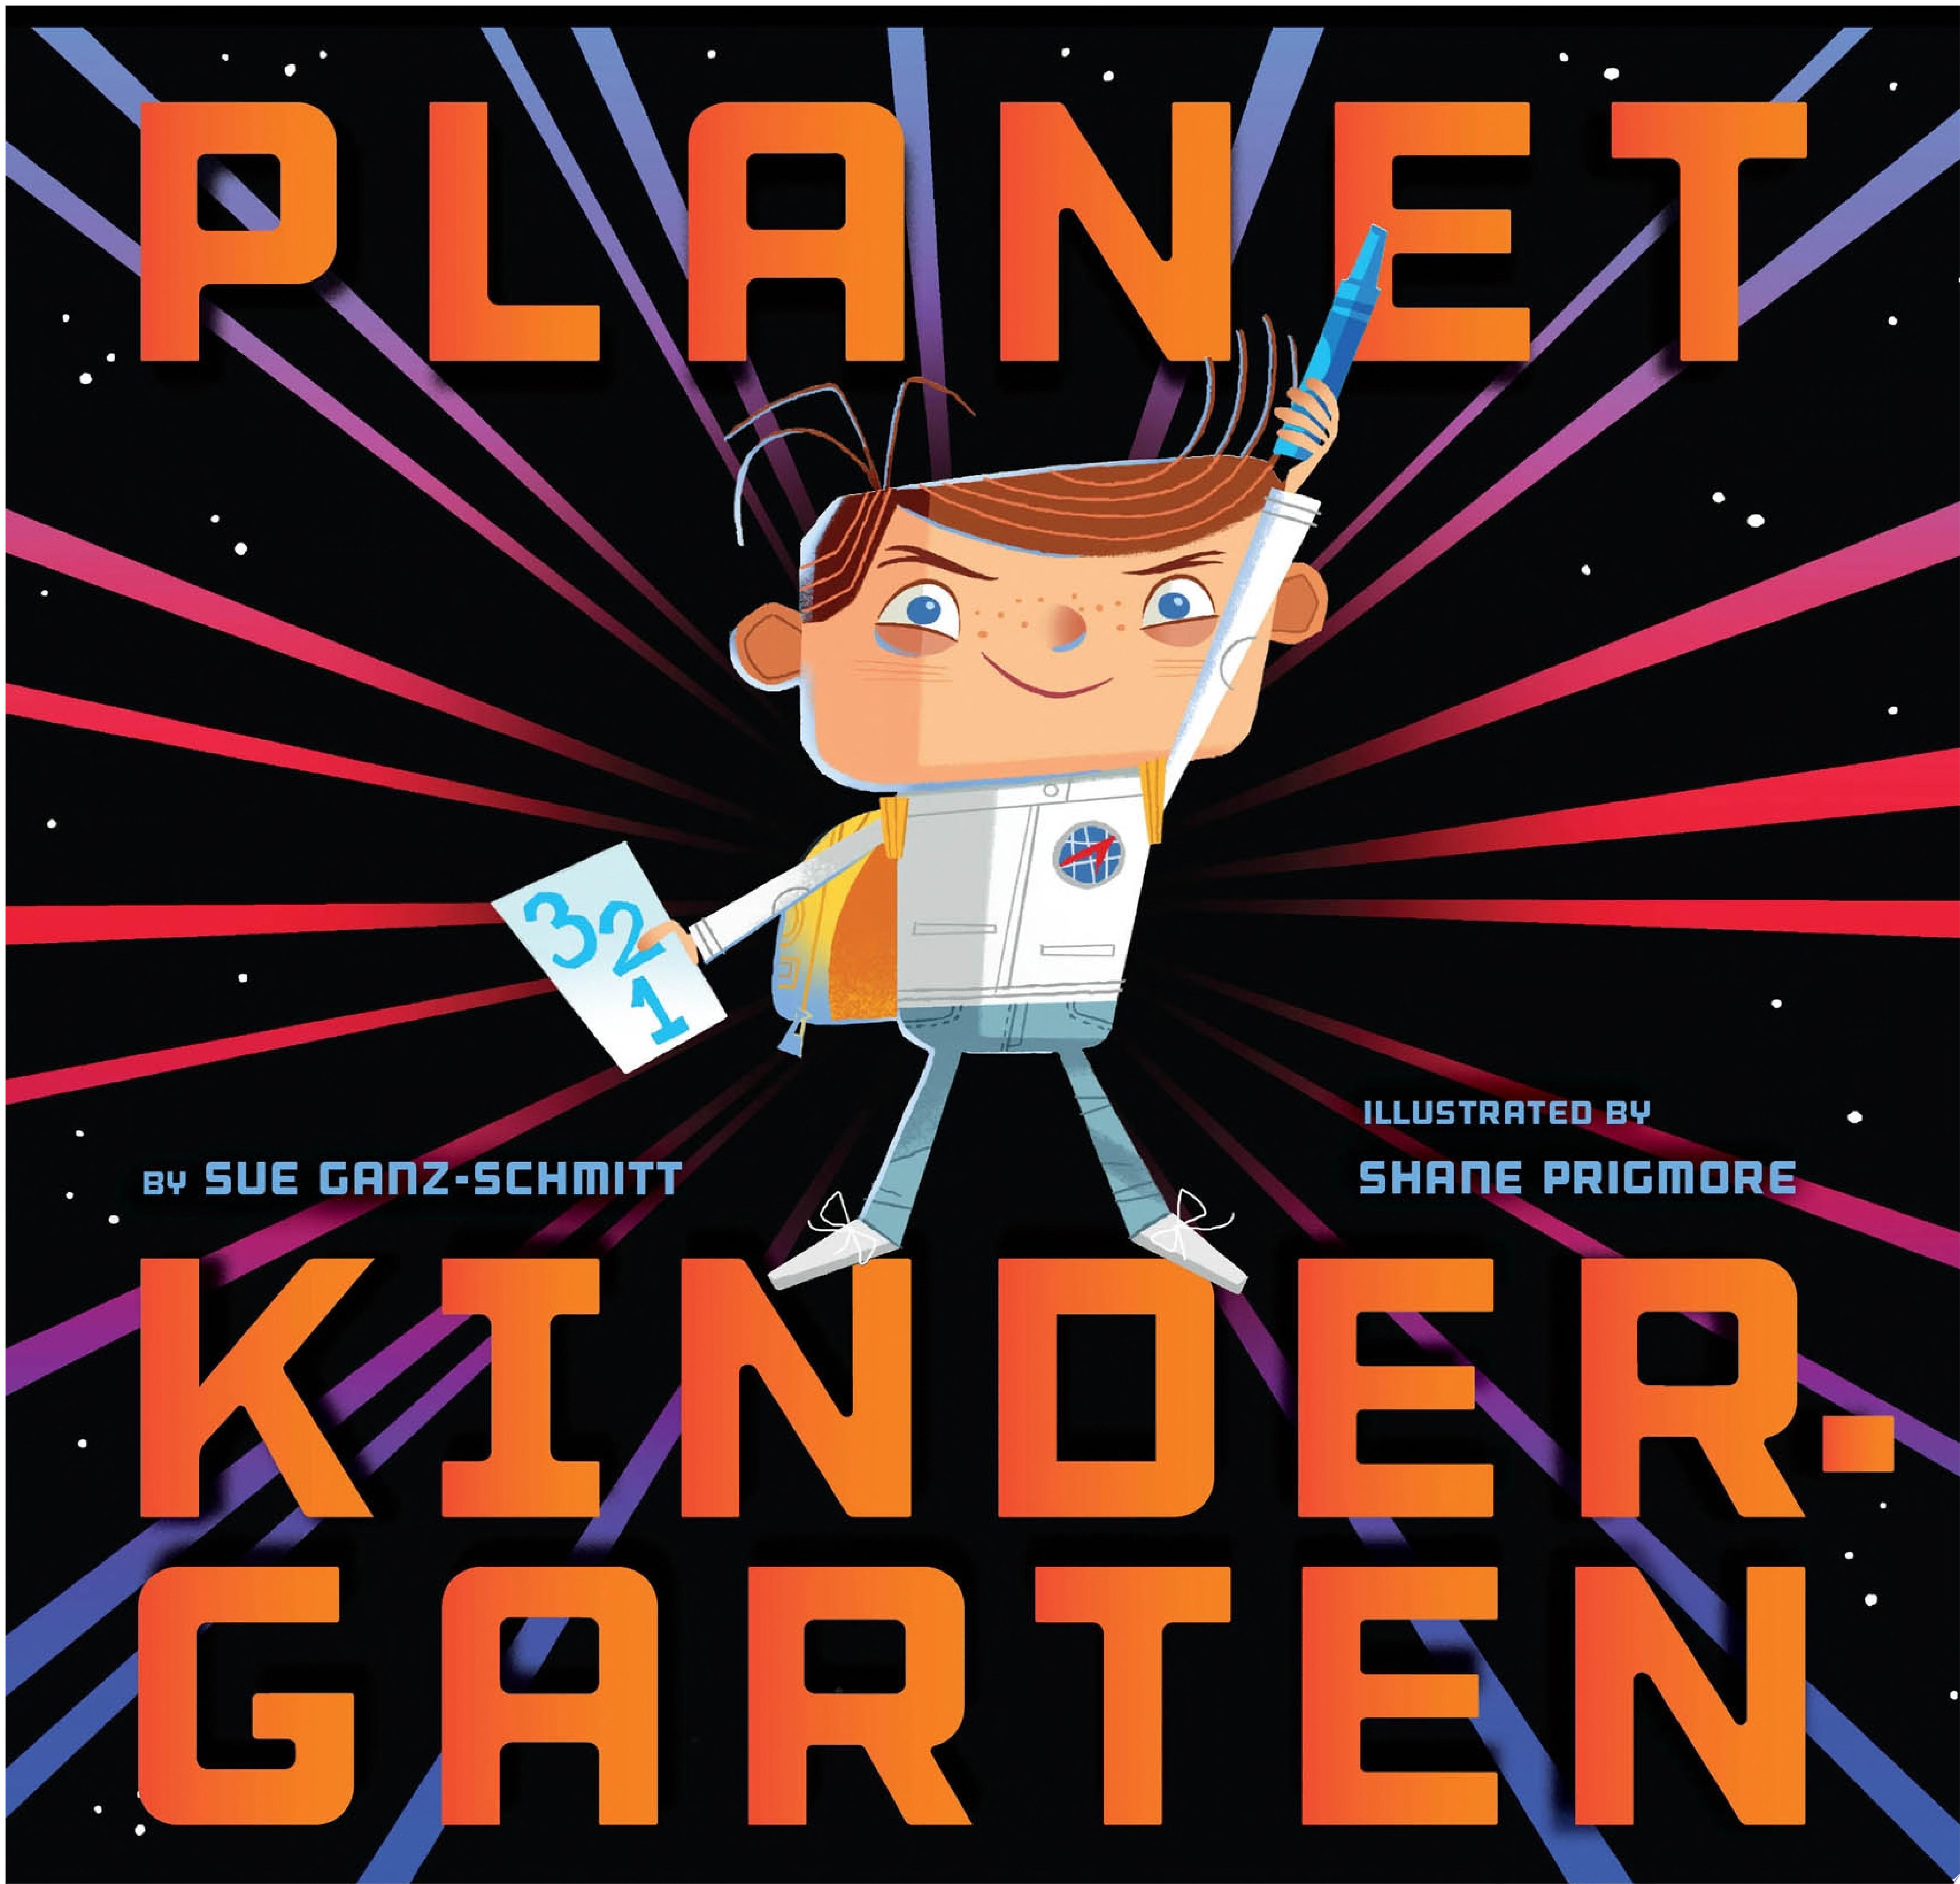 Image for "Planet Kindergarten"